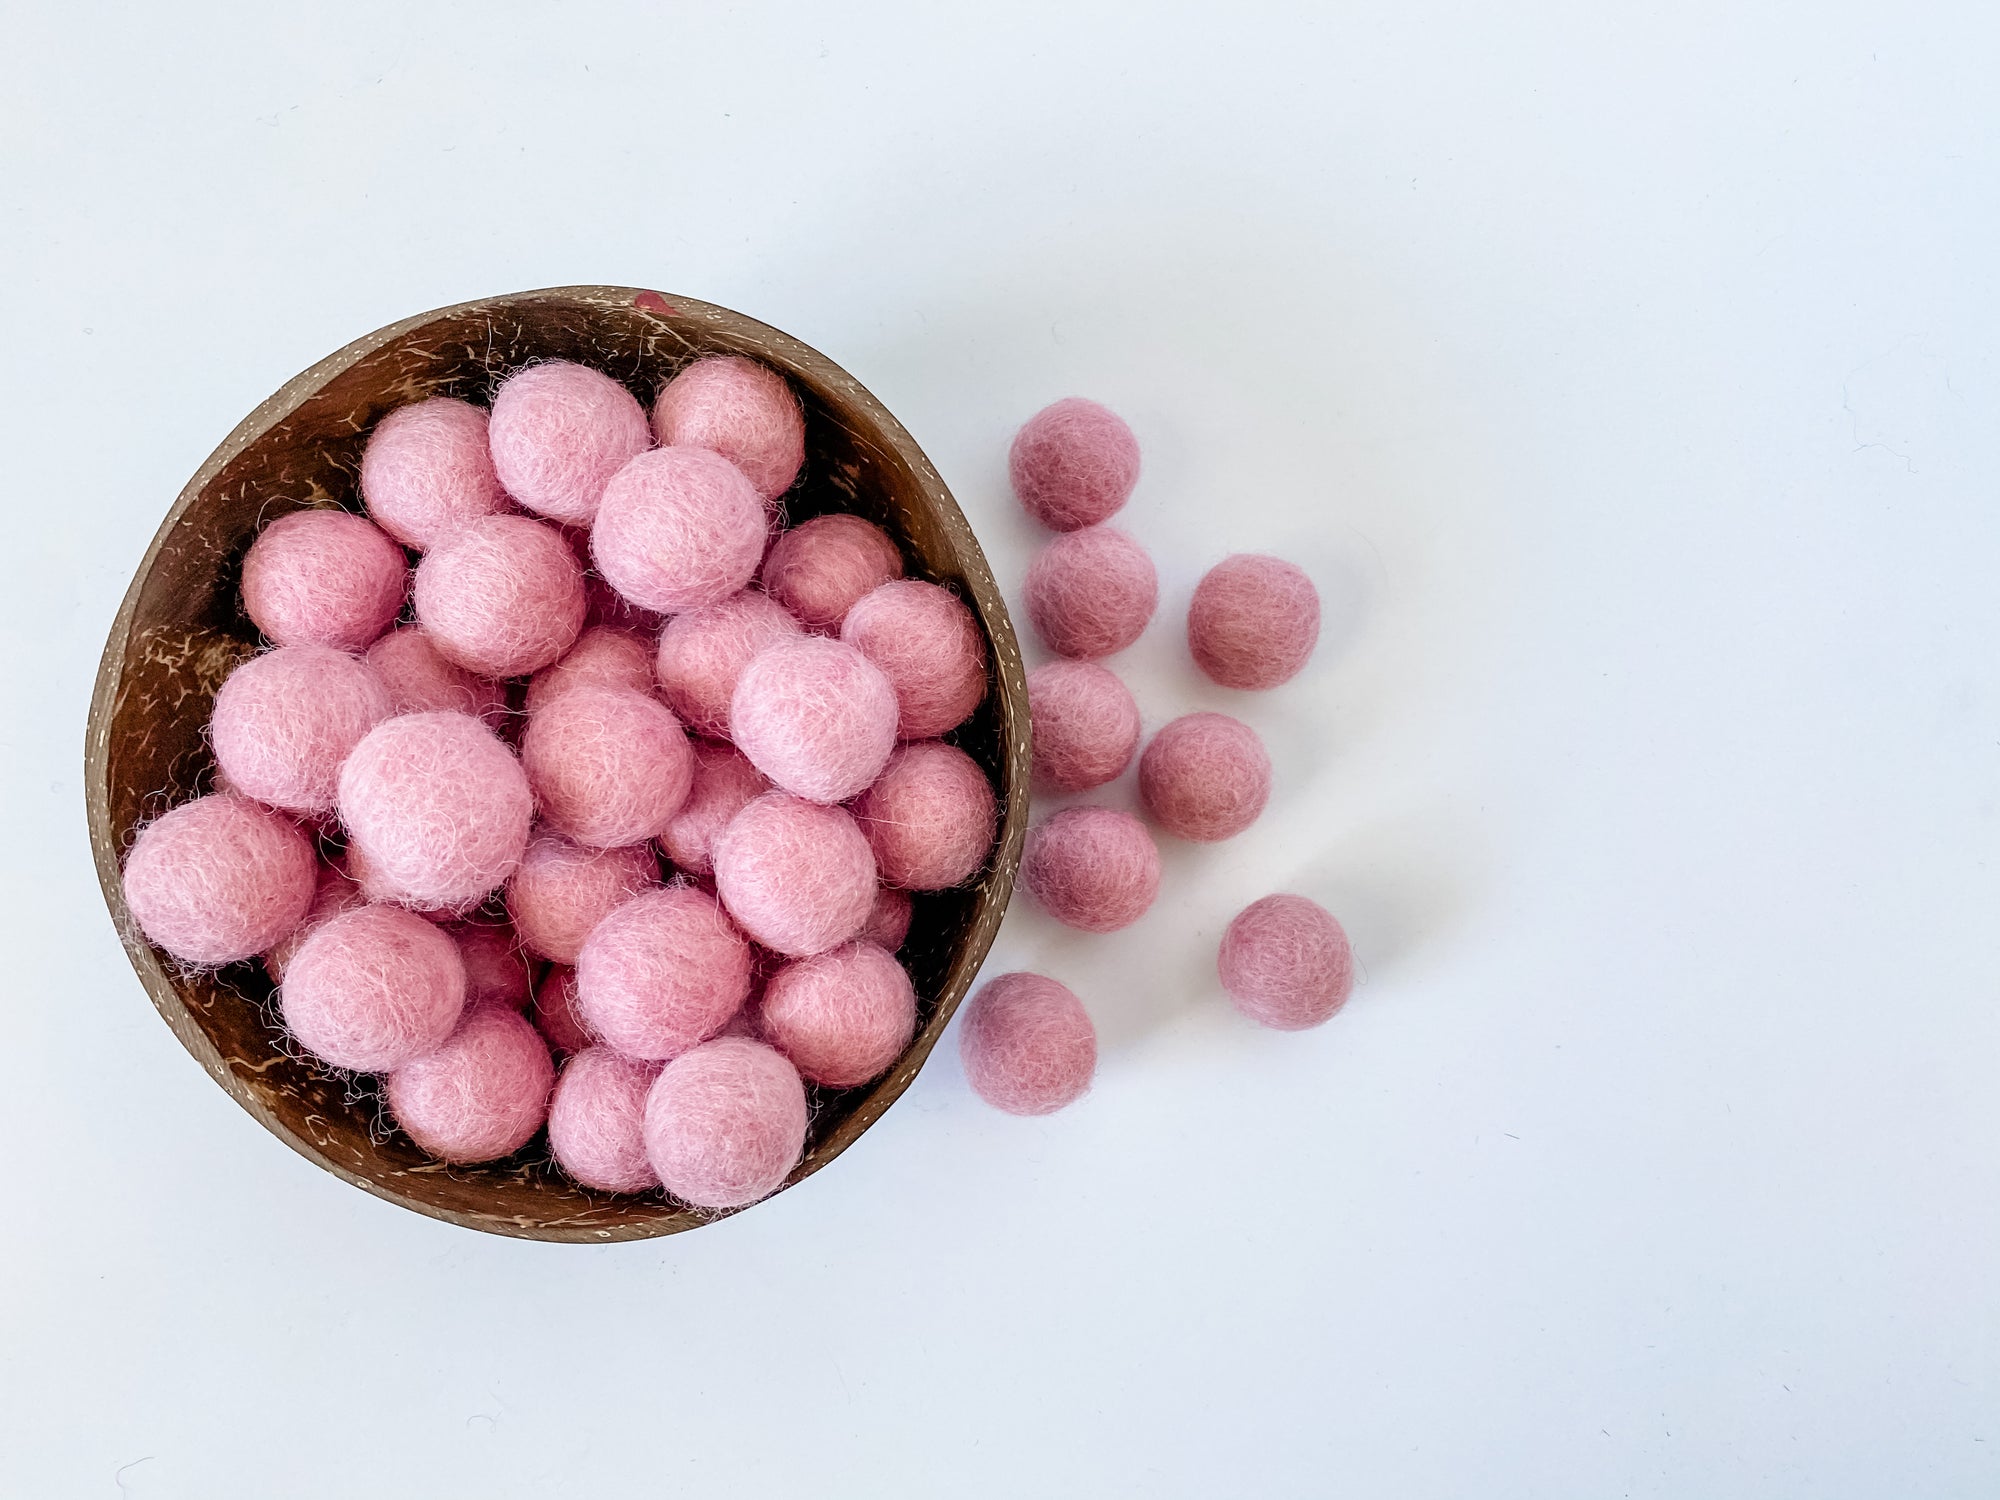 Fat and chunky big pink wool balls for sensory play.